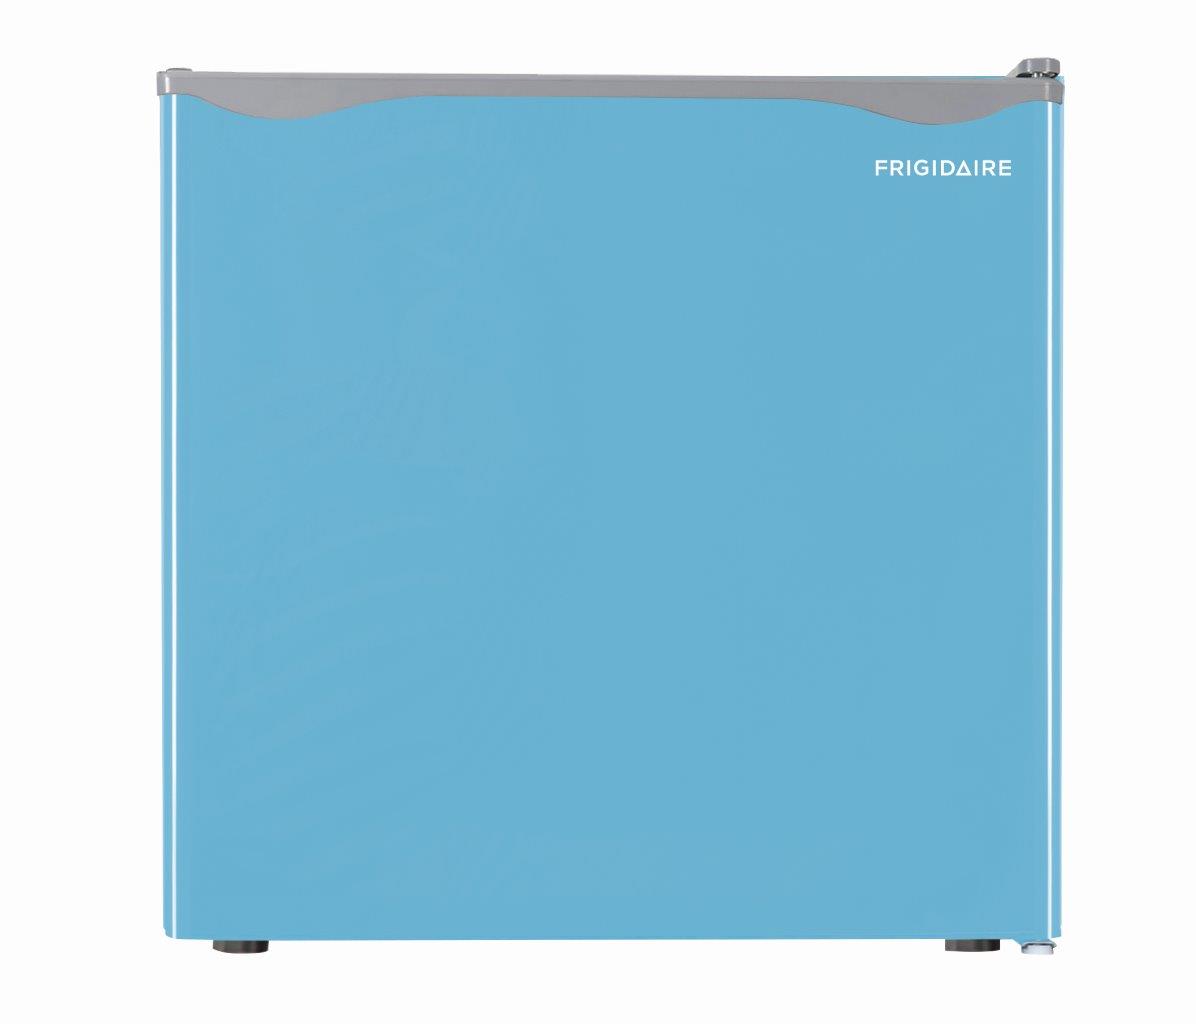 Frigidaire 1.6 Cu. Ft. Single Door Mini Refrigerator, EFR115, Blue - image 2 of 3